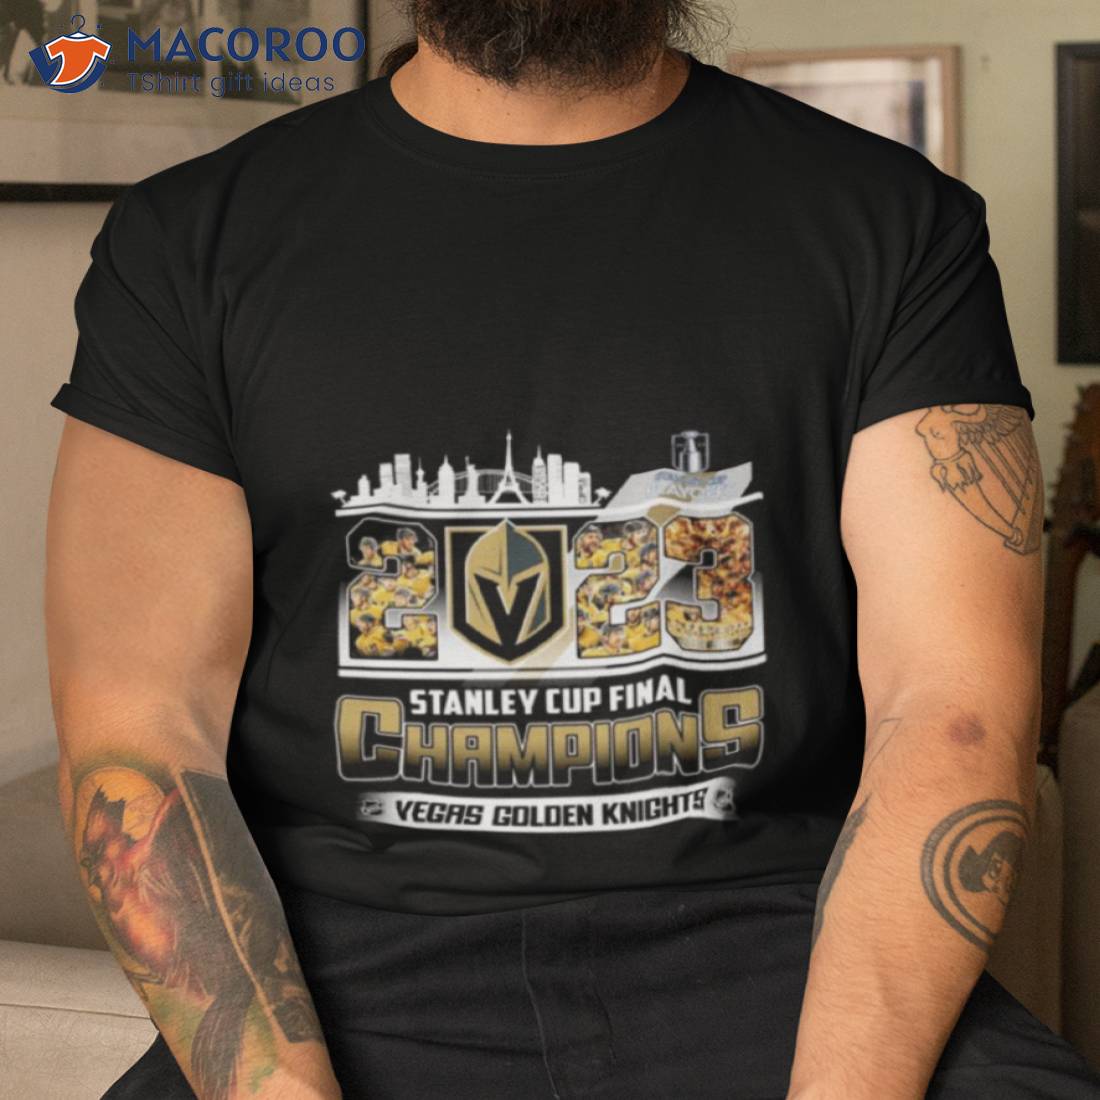 https://images.macoroo.com/wp-content/uploads/2023/06/2022-2023-stanley-cup-final-champions-vegas-golden-knights-shirt-tshirt.jpg